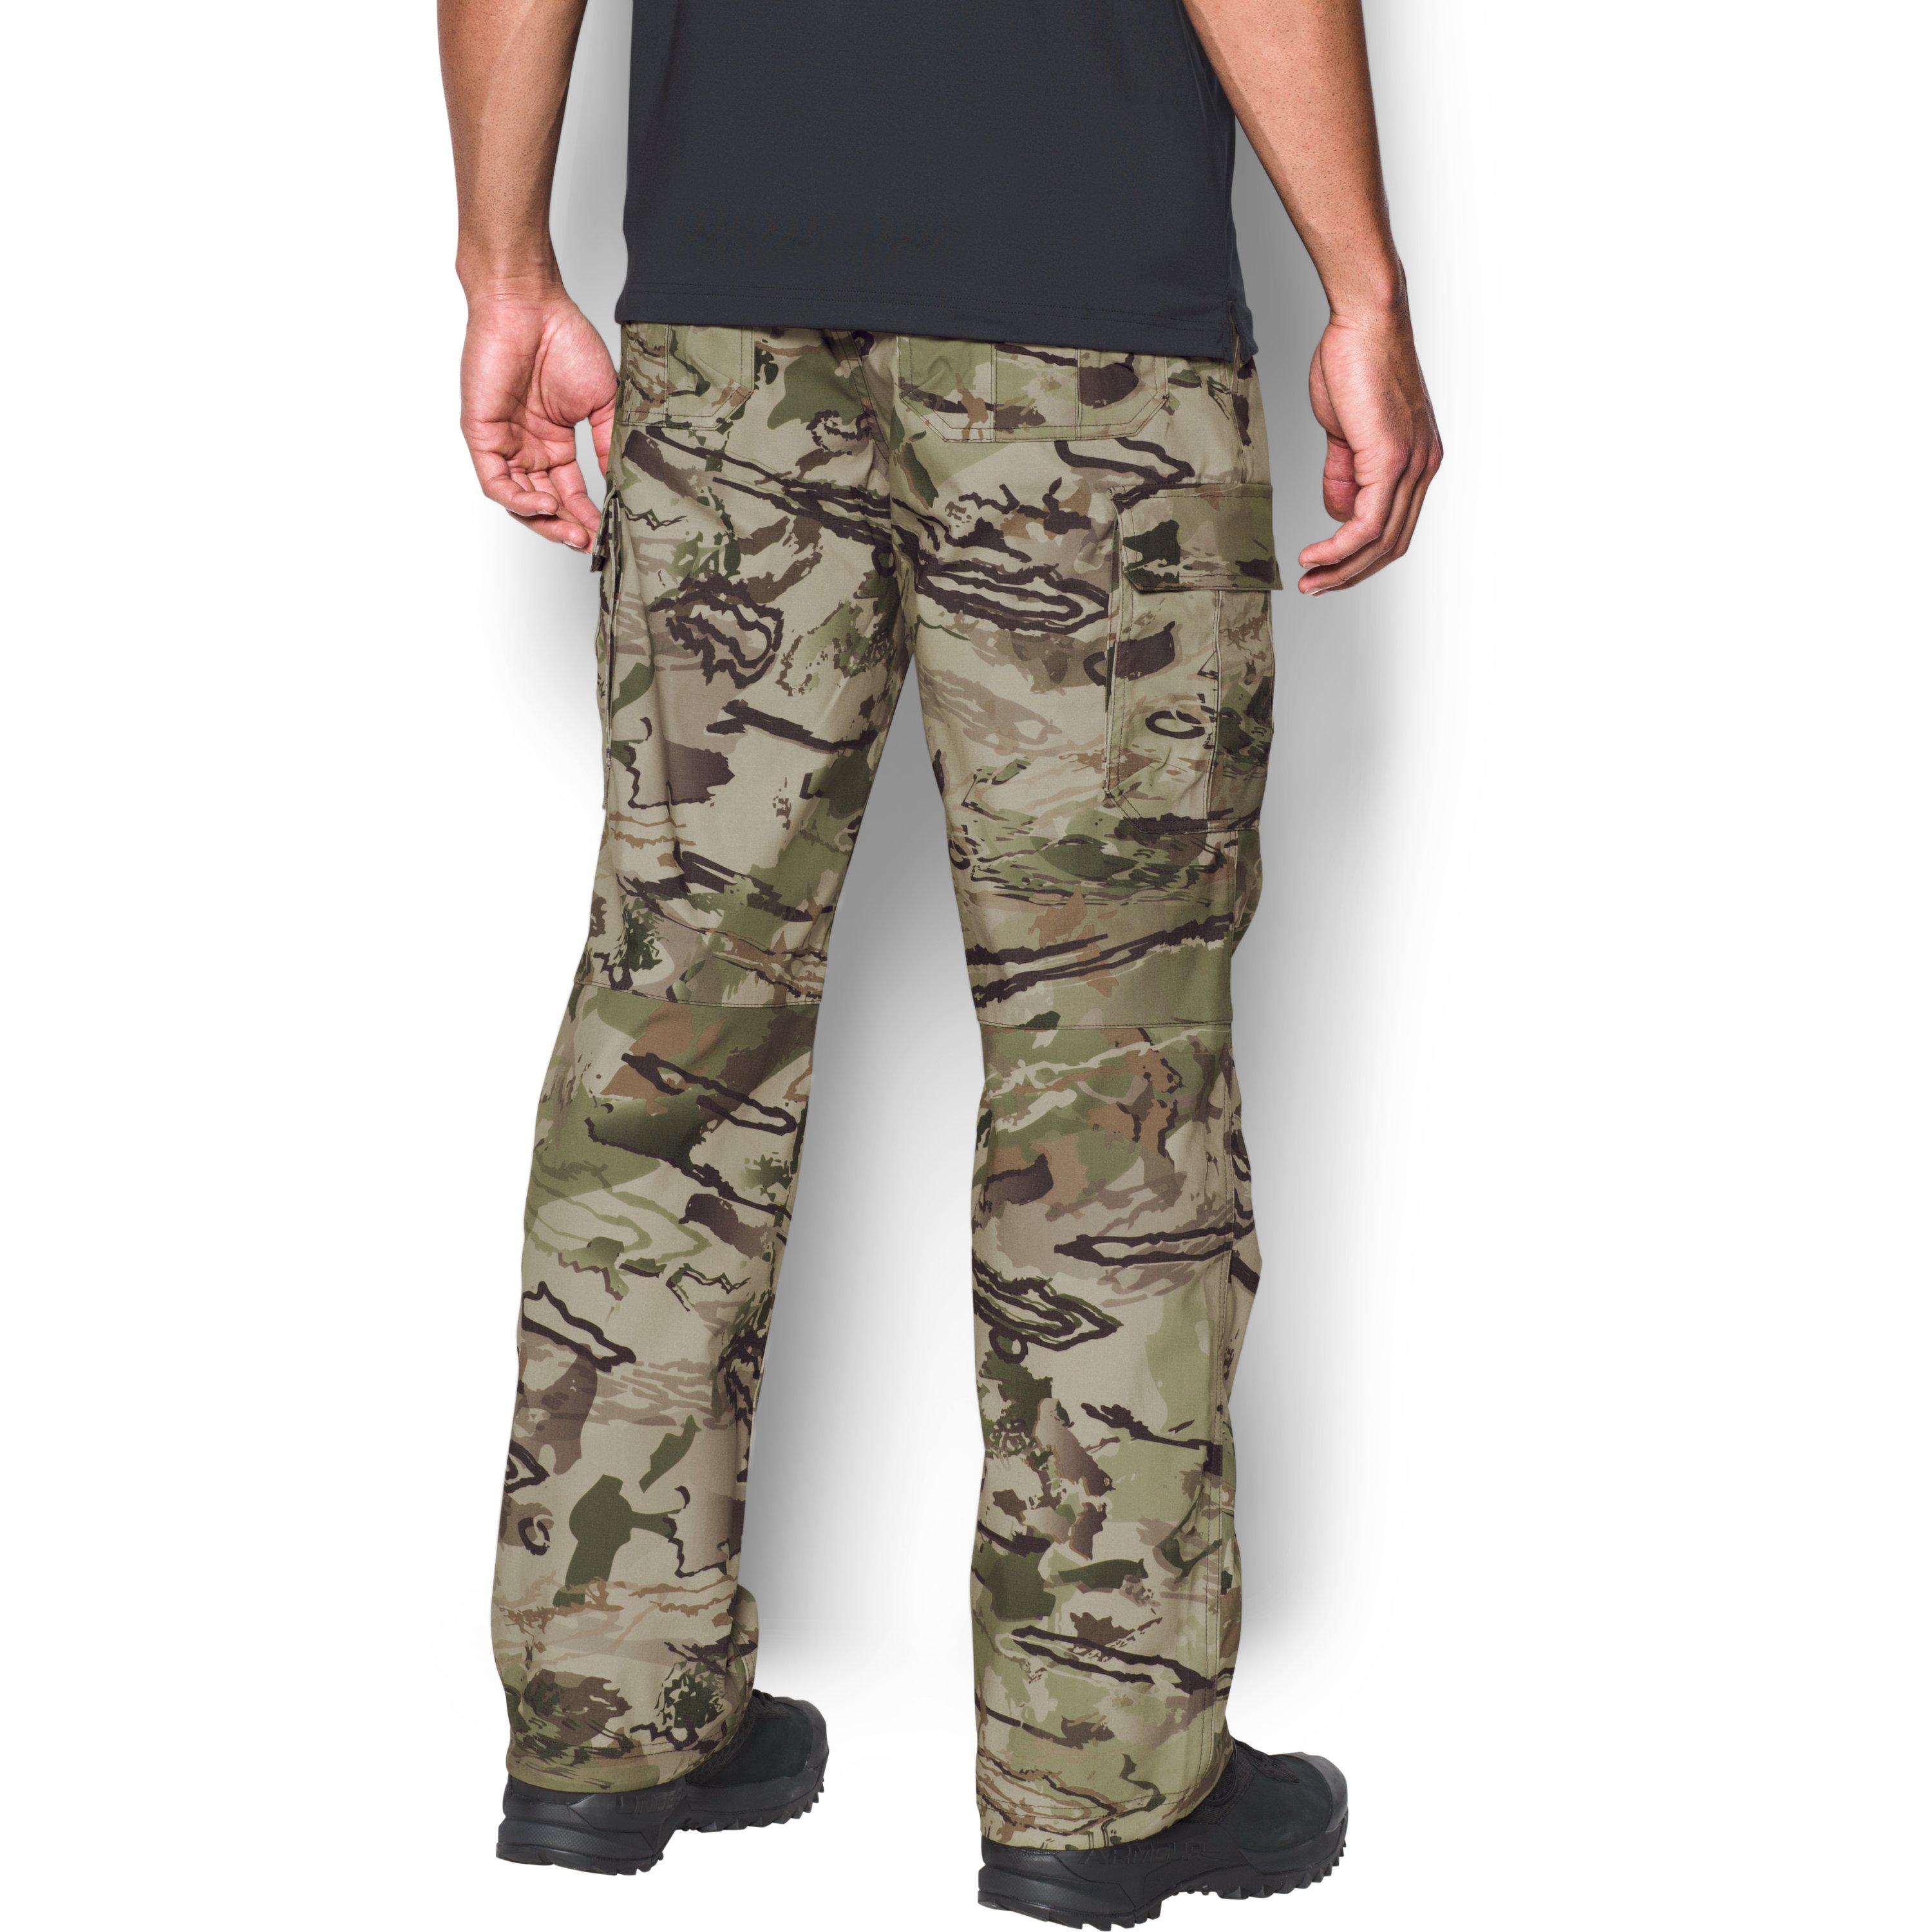 Lyst - Under Armour Men's Ua Storm Tactical Camo Patrol Pants for Men